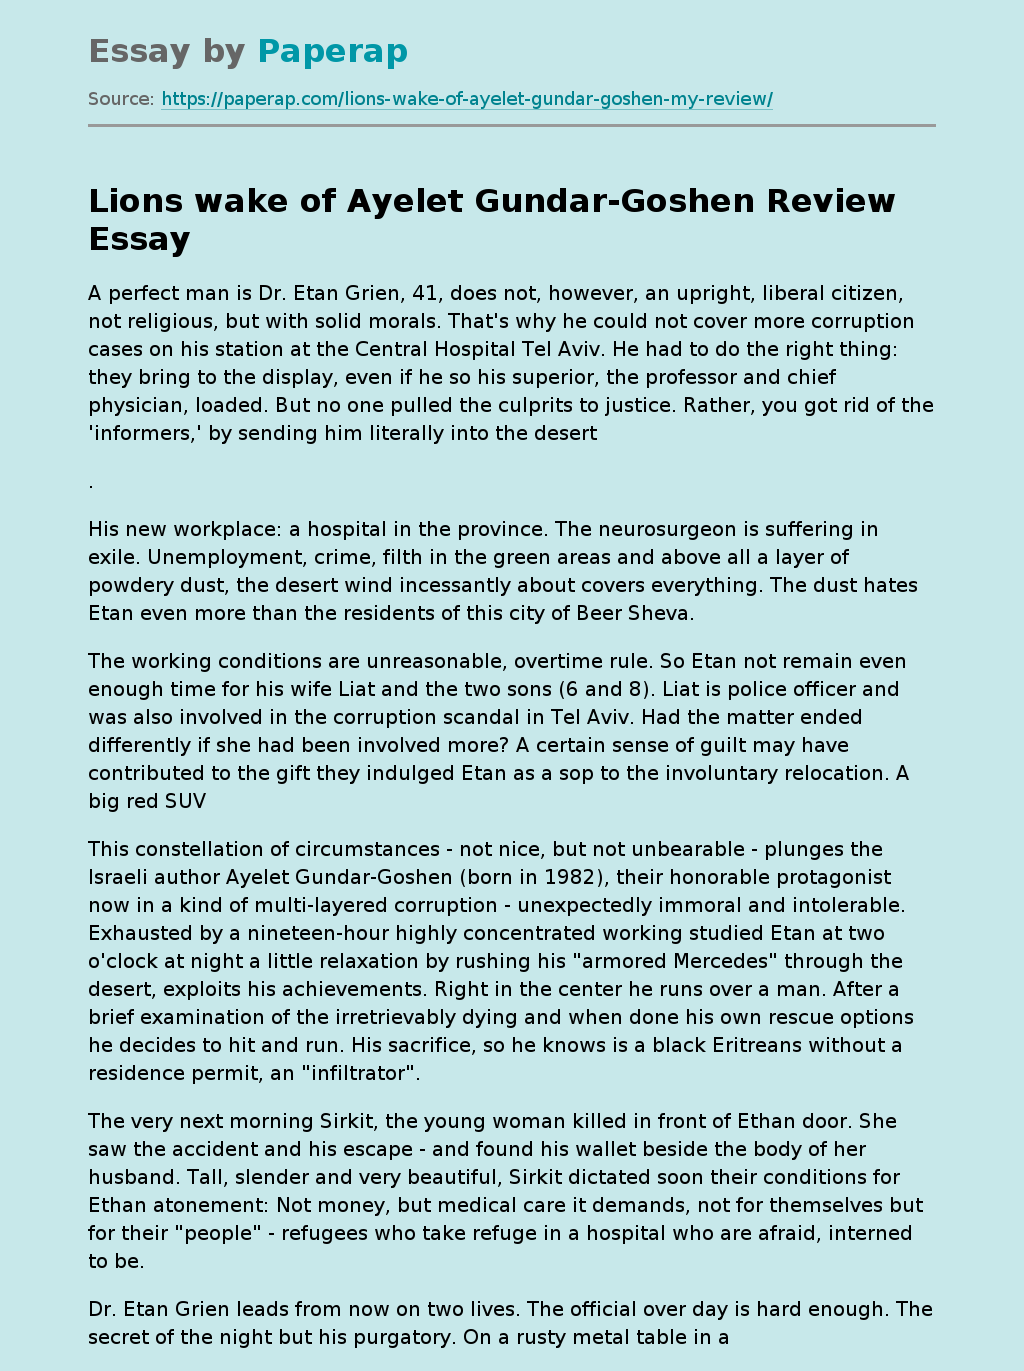 Lions Wake Of Ayelet Gundar-goshen Review